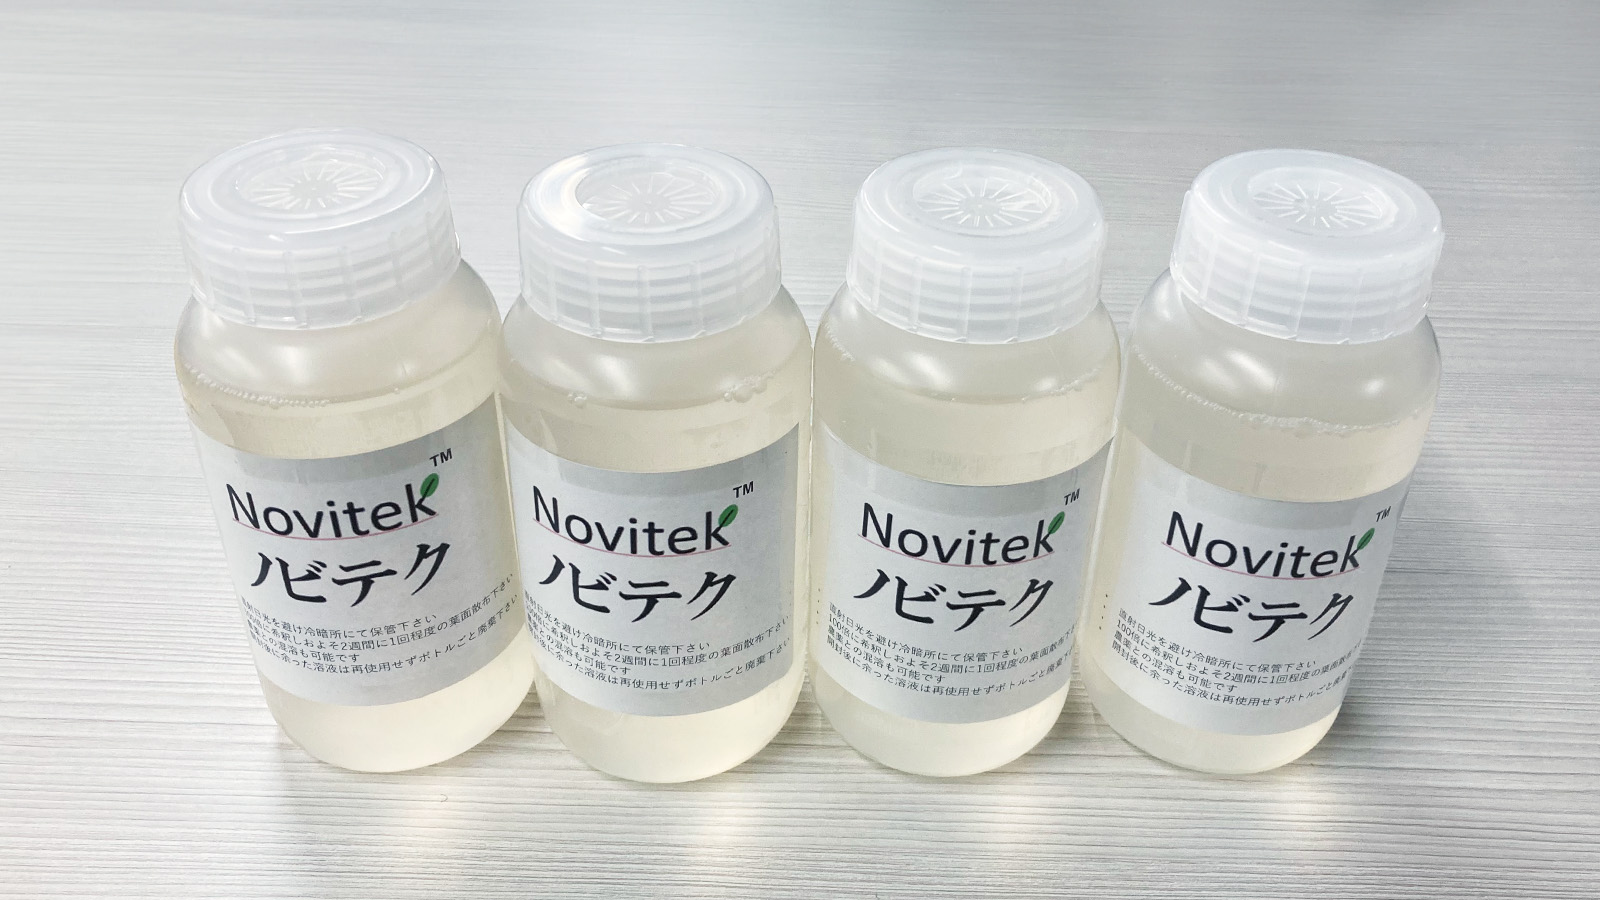 Photo: Novitek, a plant growth-promoting liquid